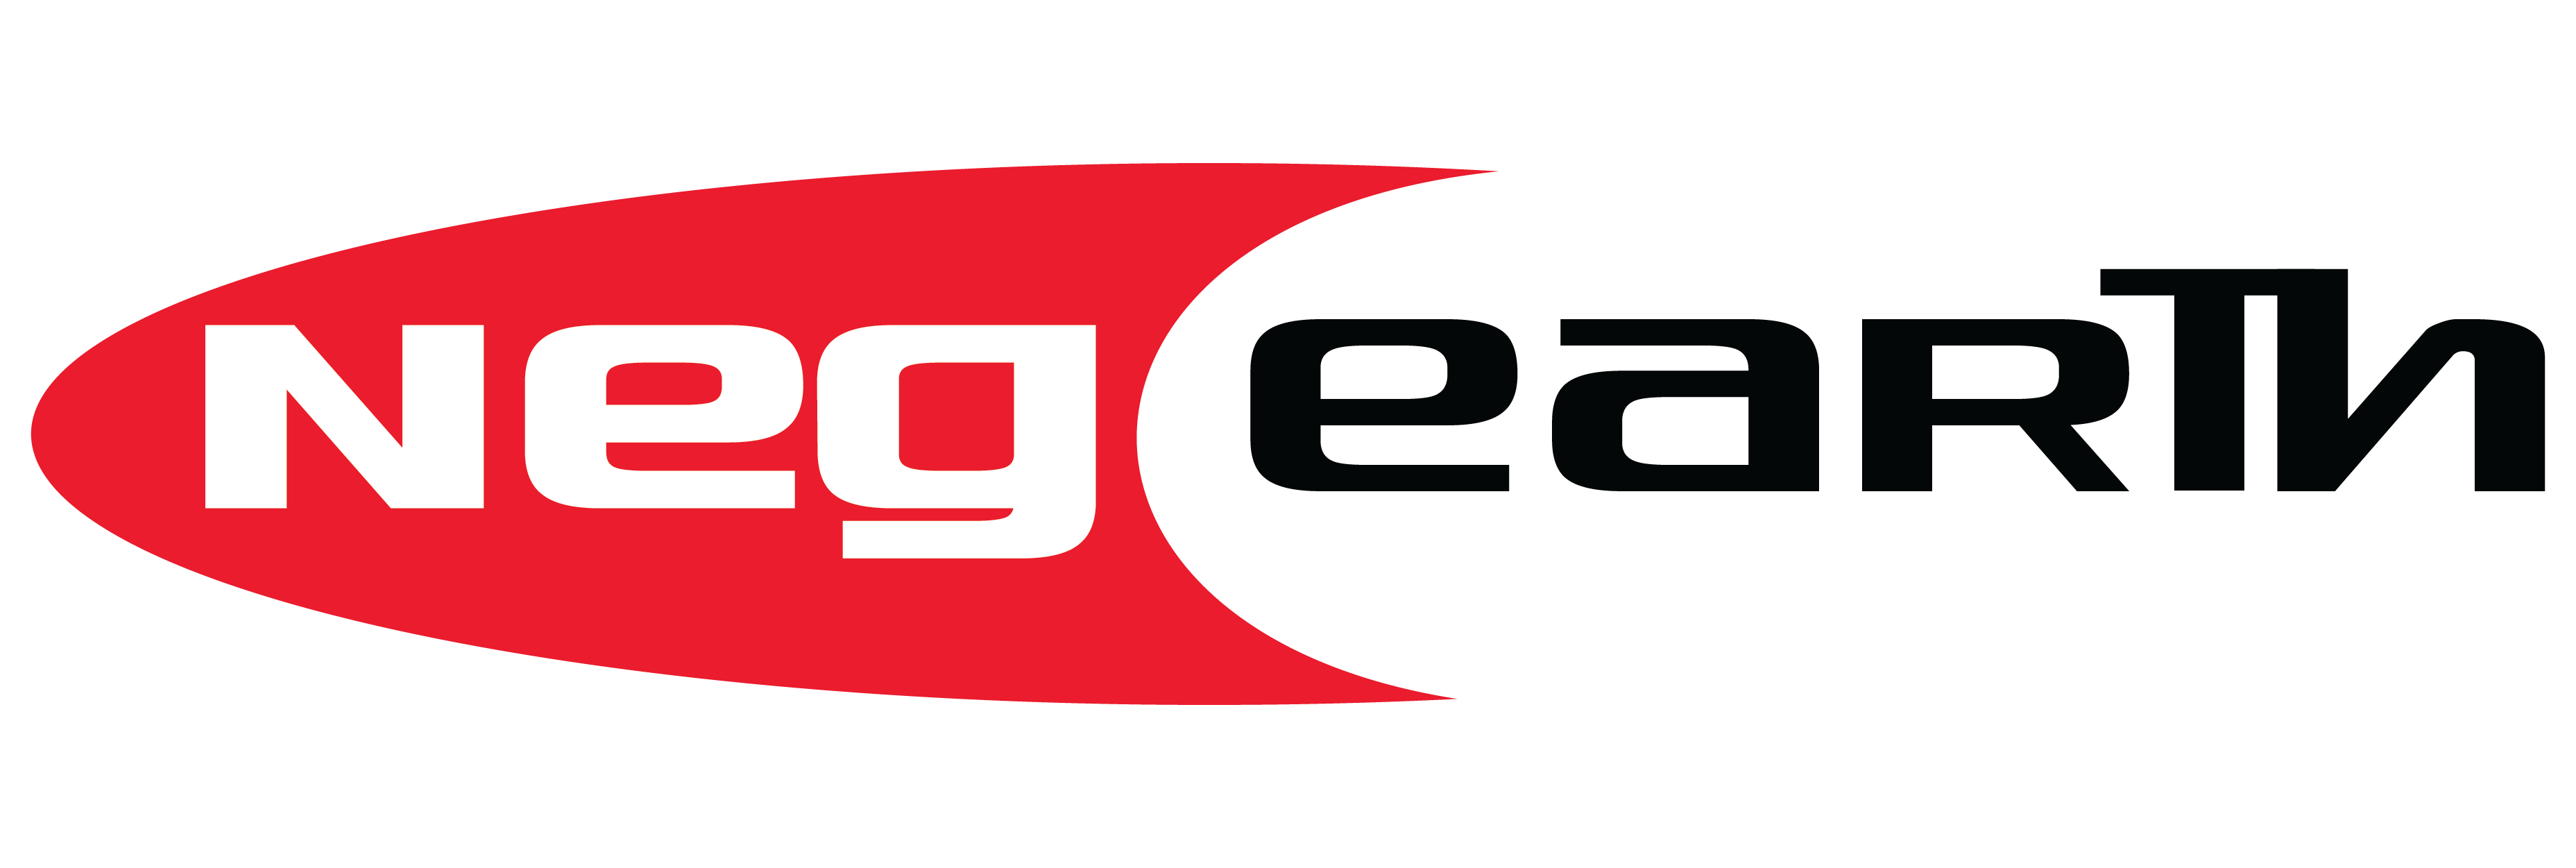 Neg Earth logo main transparent